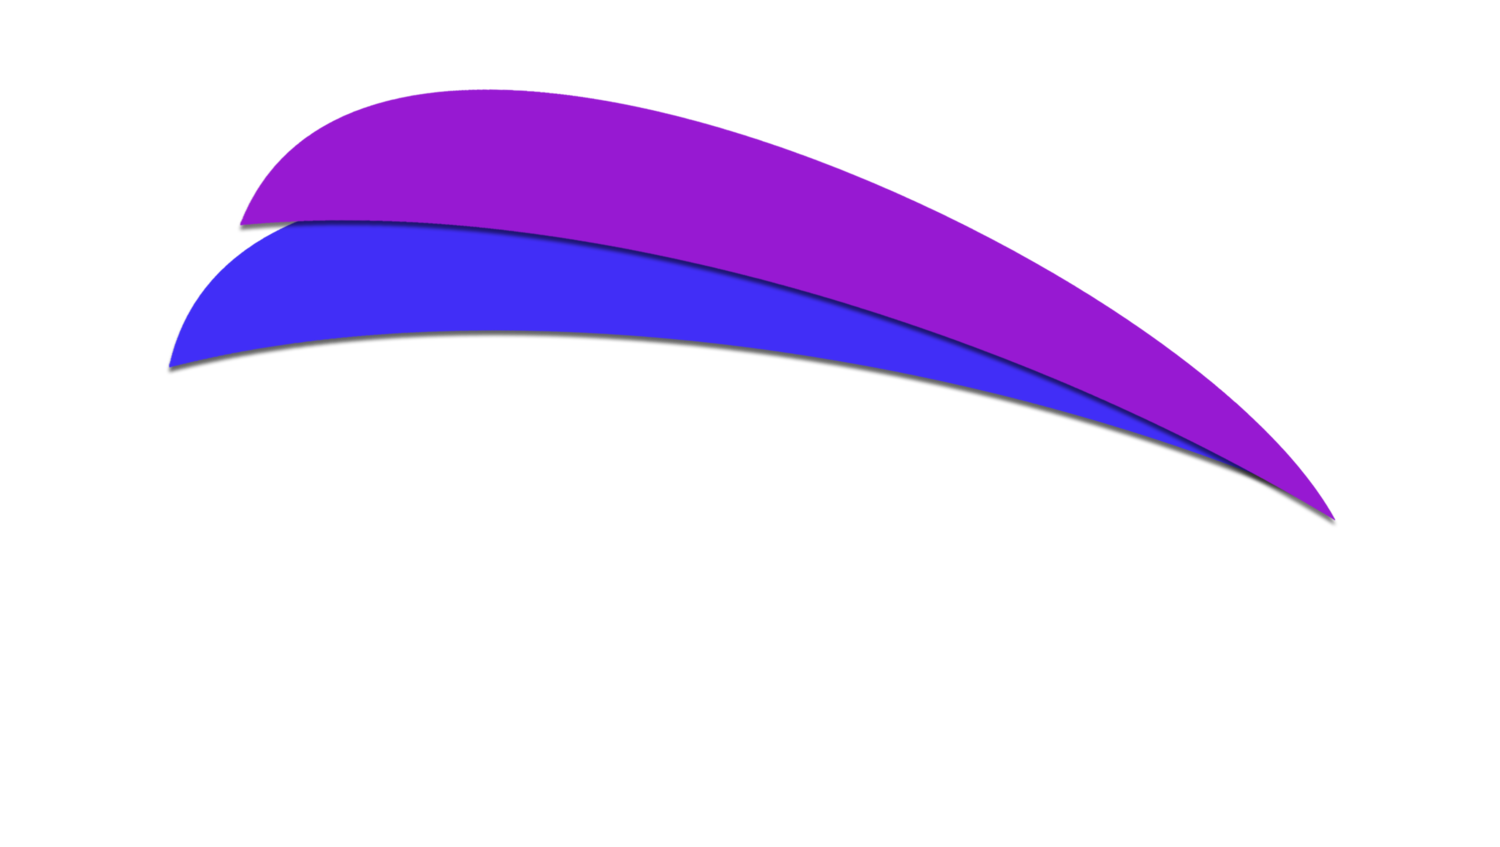 Integrative Healing at OM